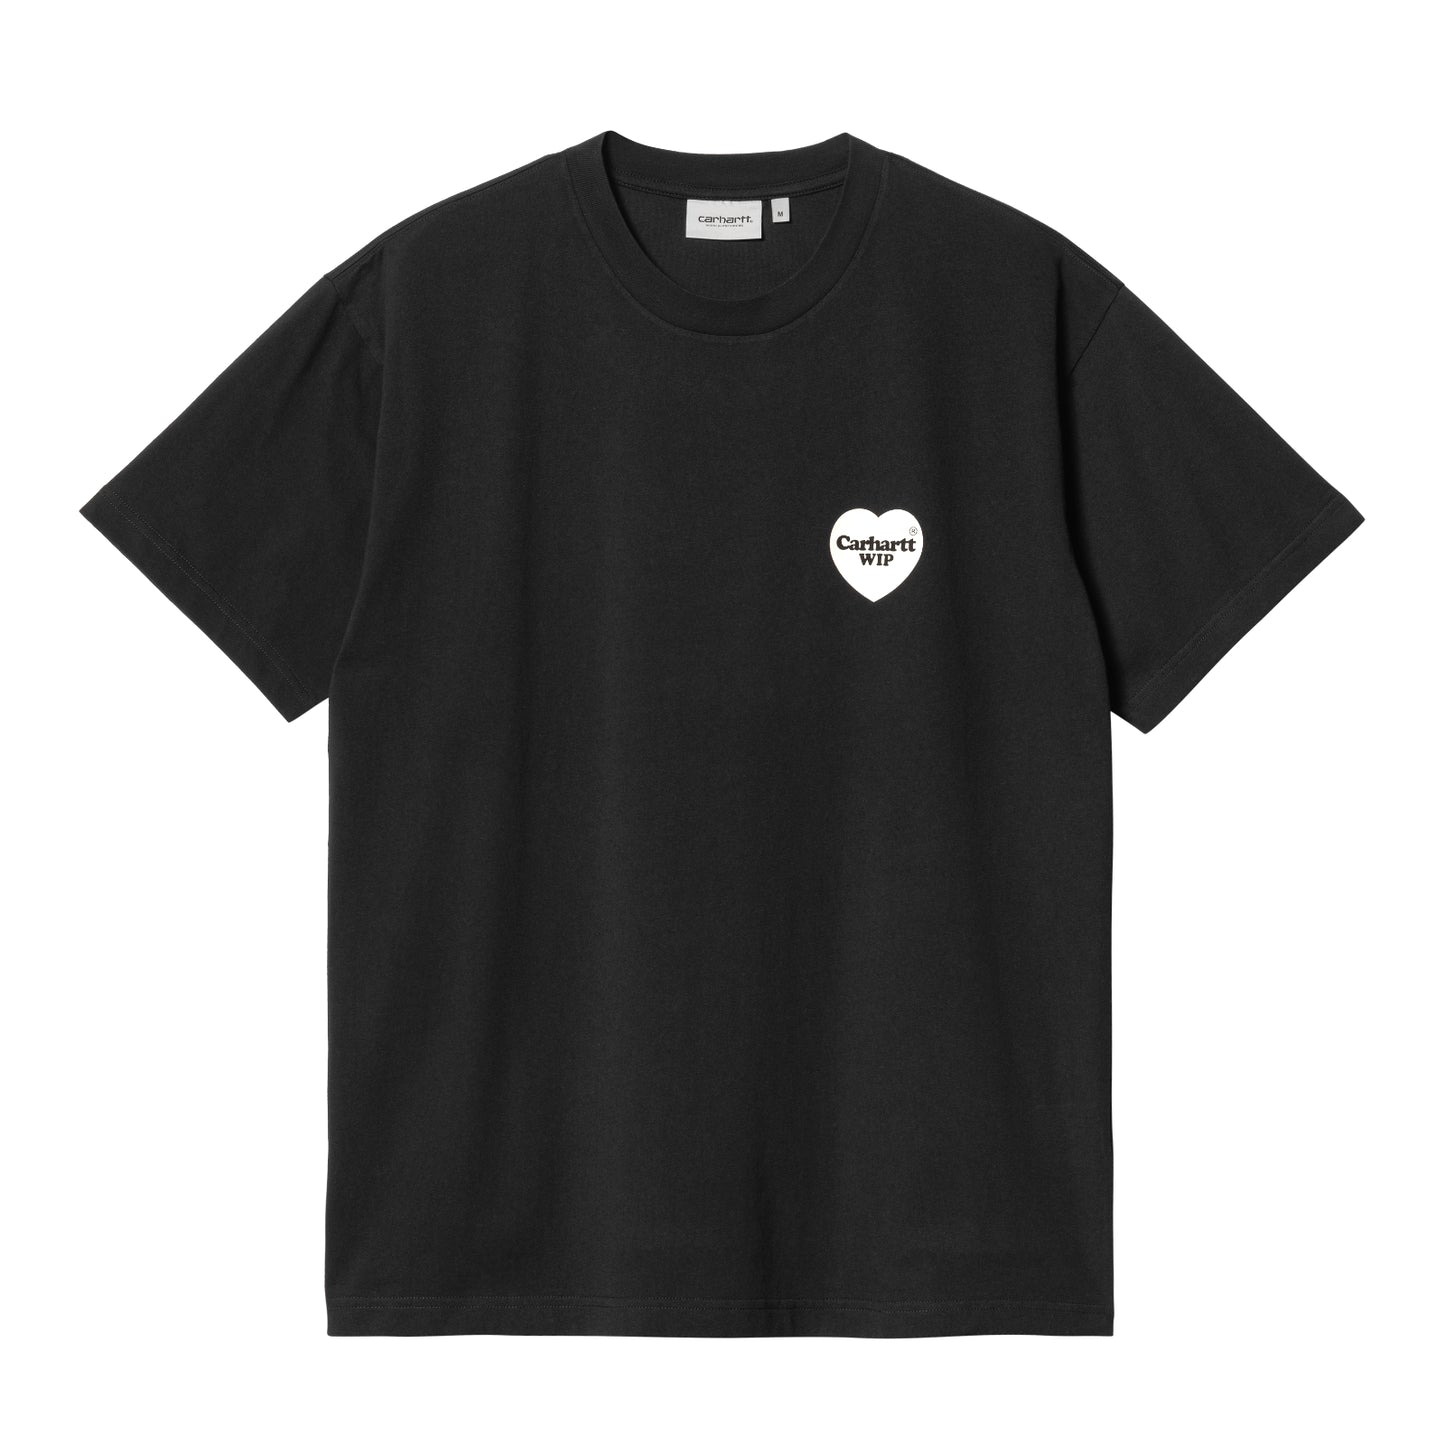 Carhartt WIP Heart Bandana T-Shirt Black/White Stone Washed. Foto da parte da frente.